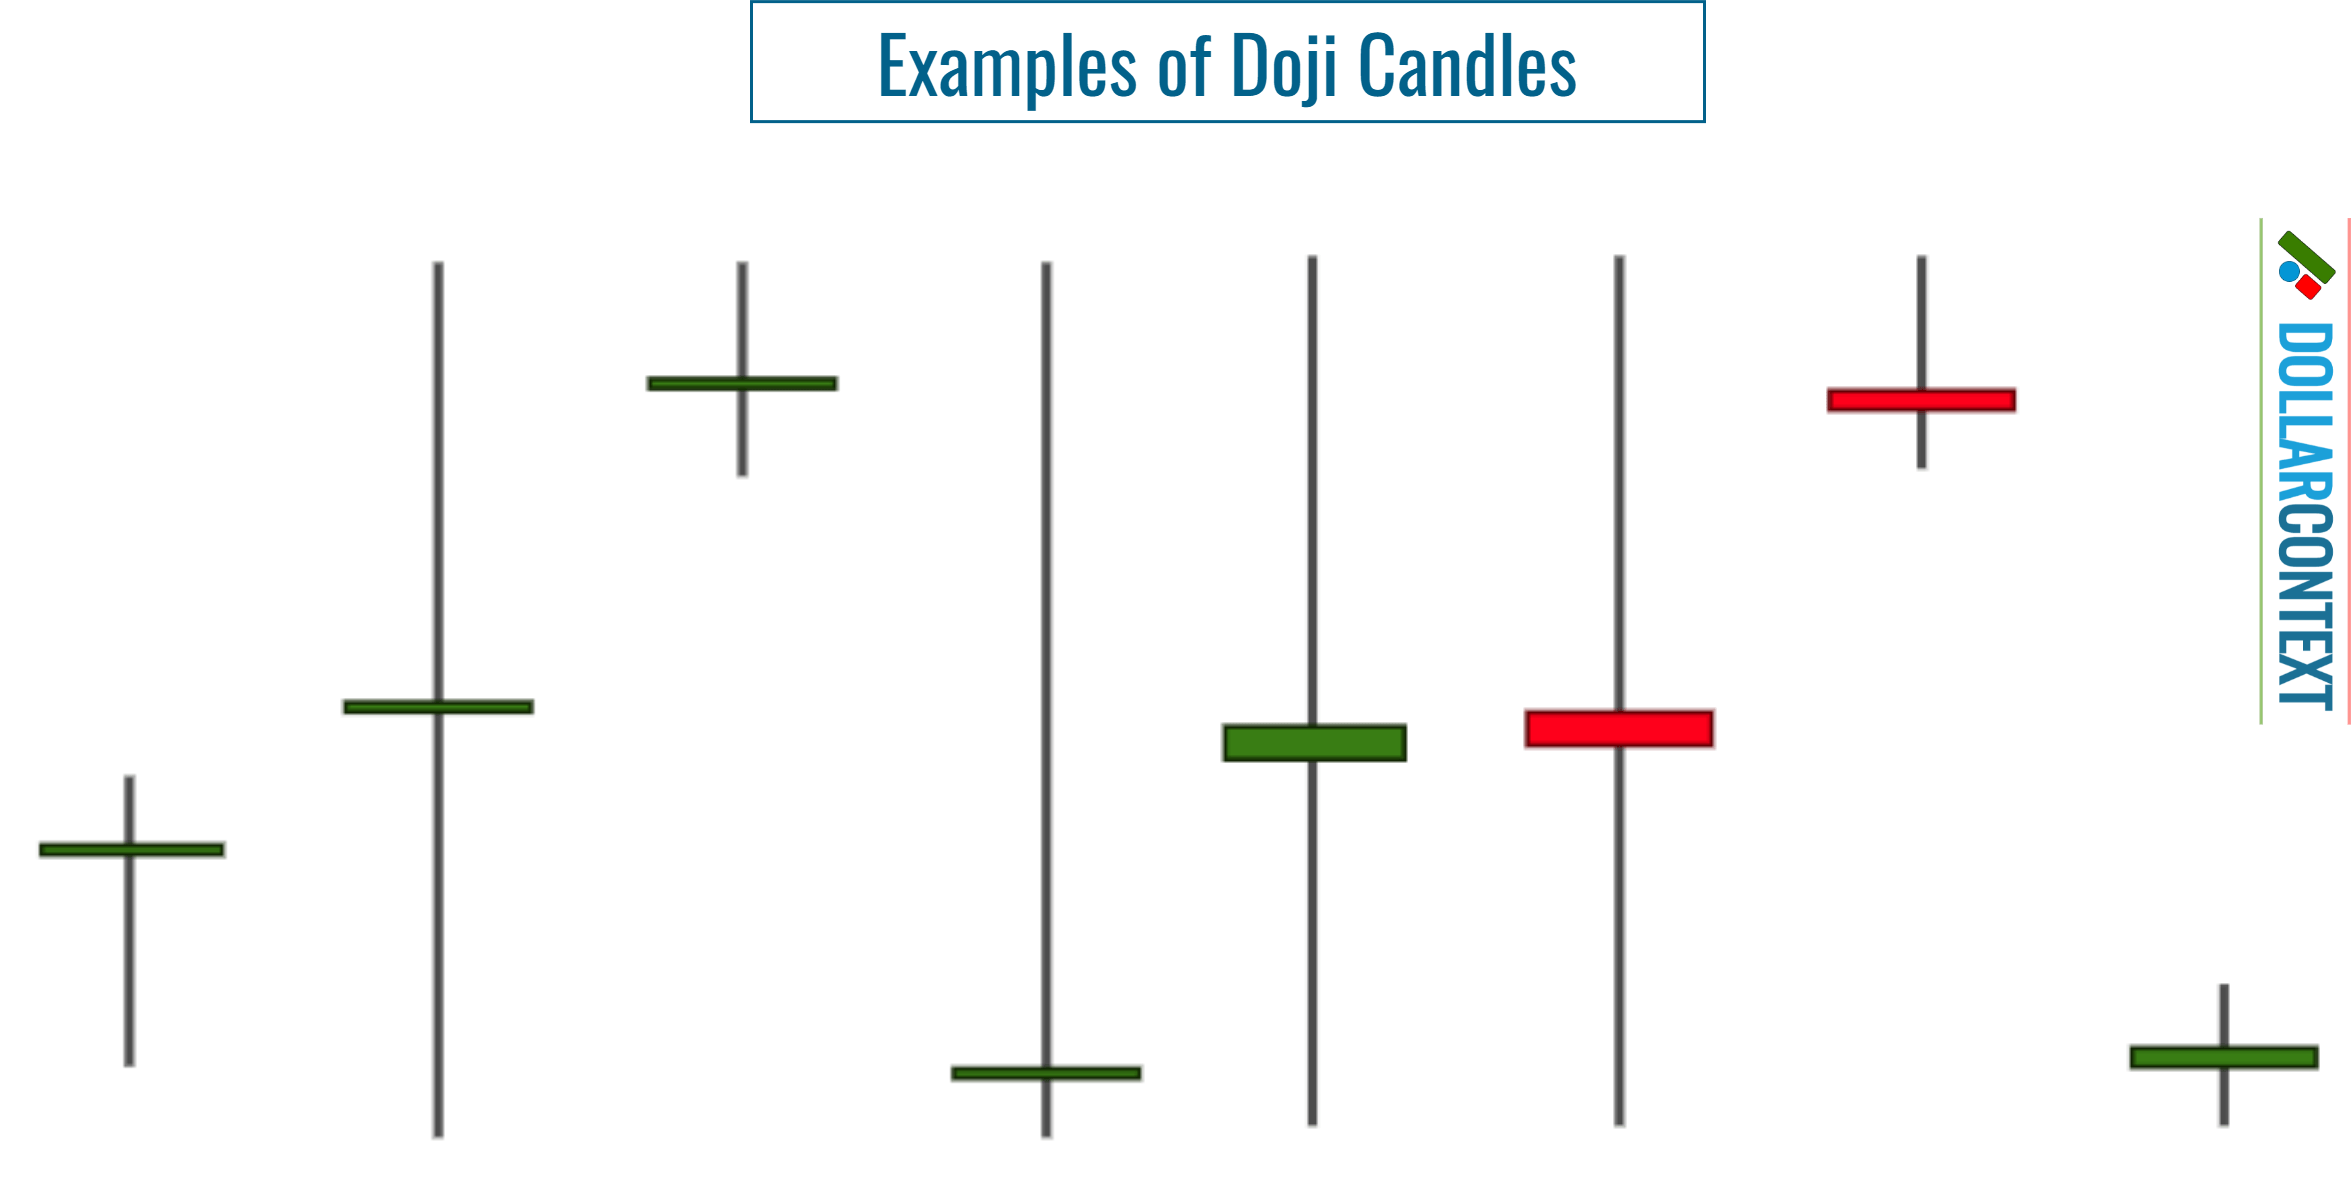 Examples of Doji Candlesticks